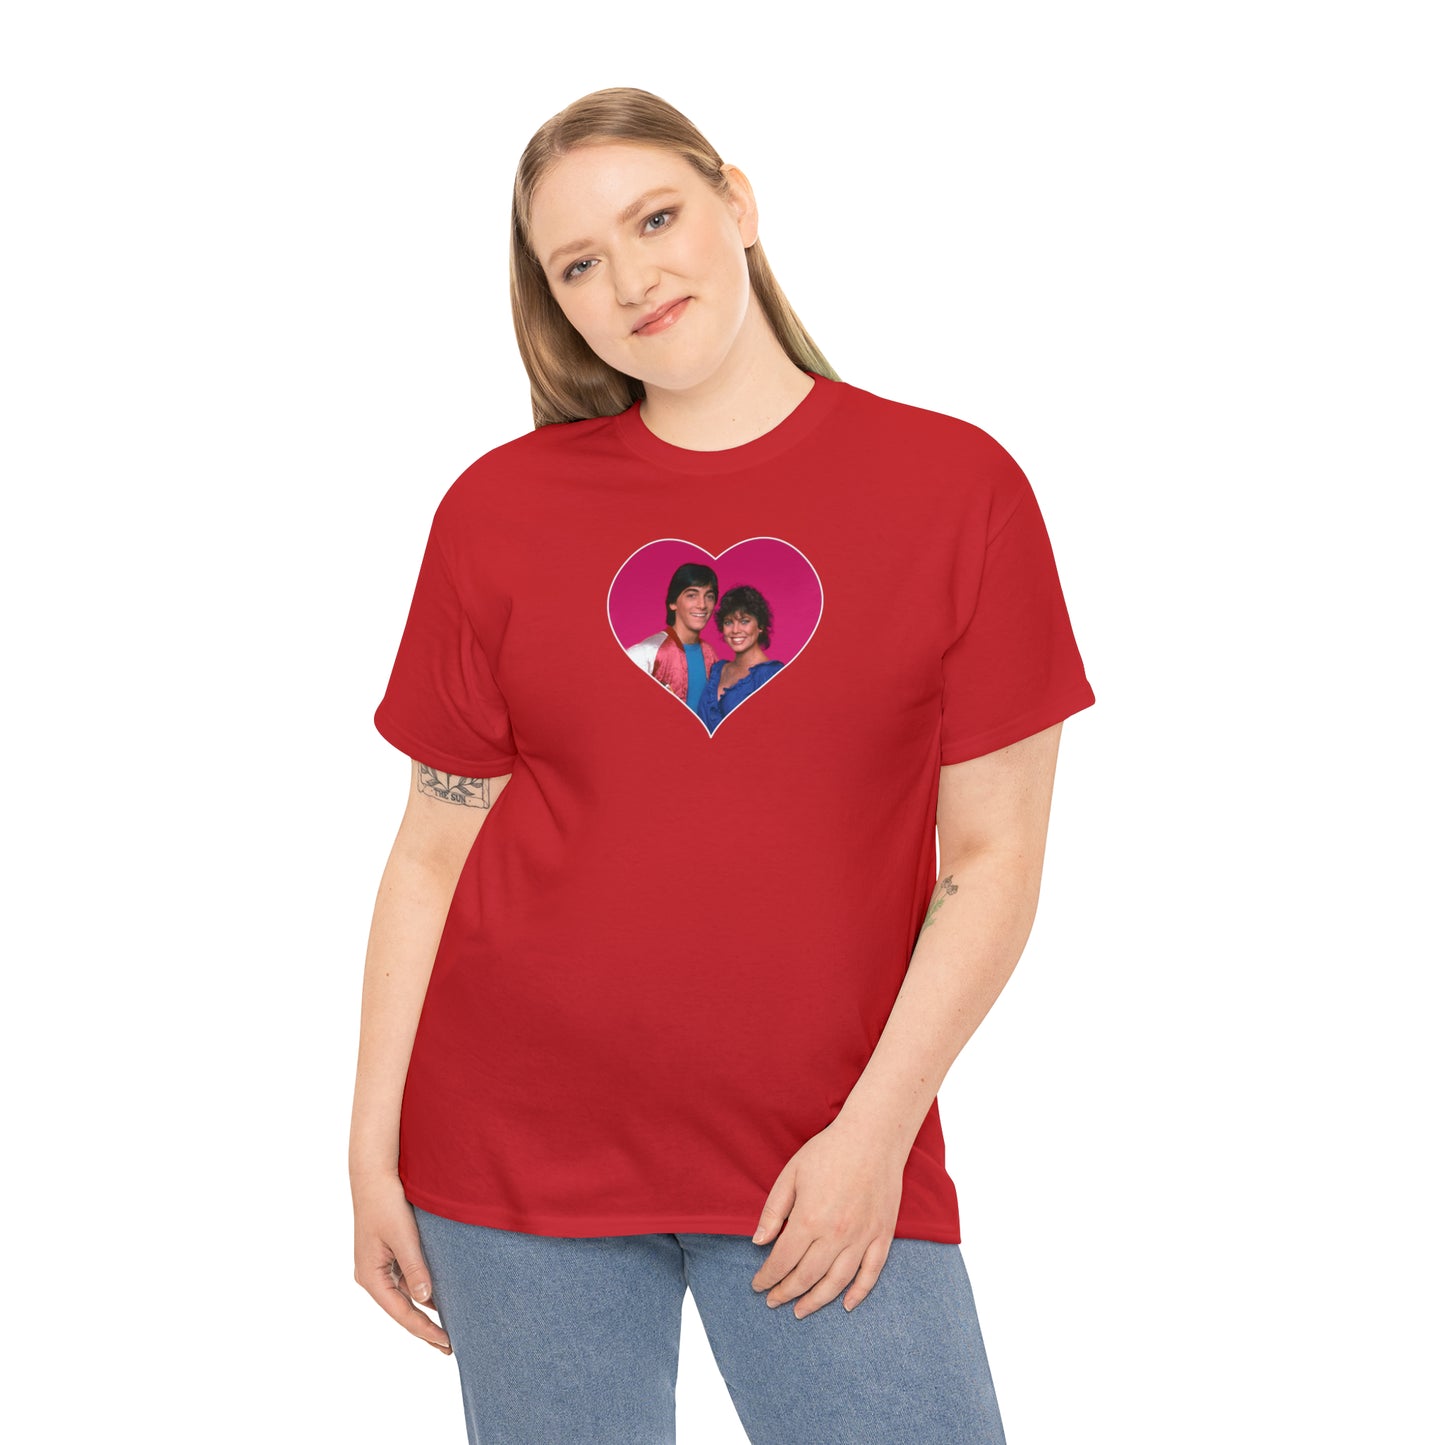 Joanie Loves Chachi T-Shirt